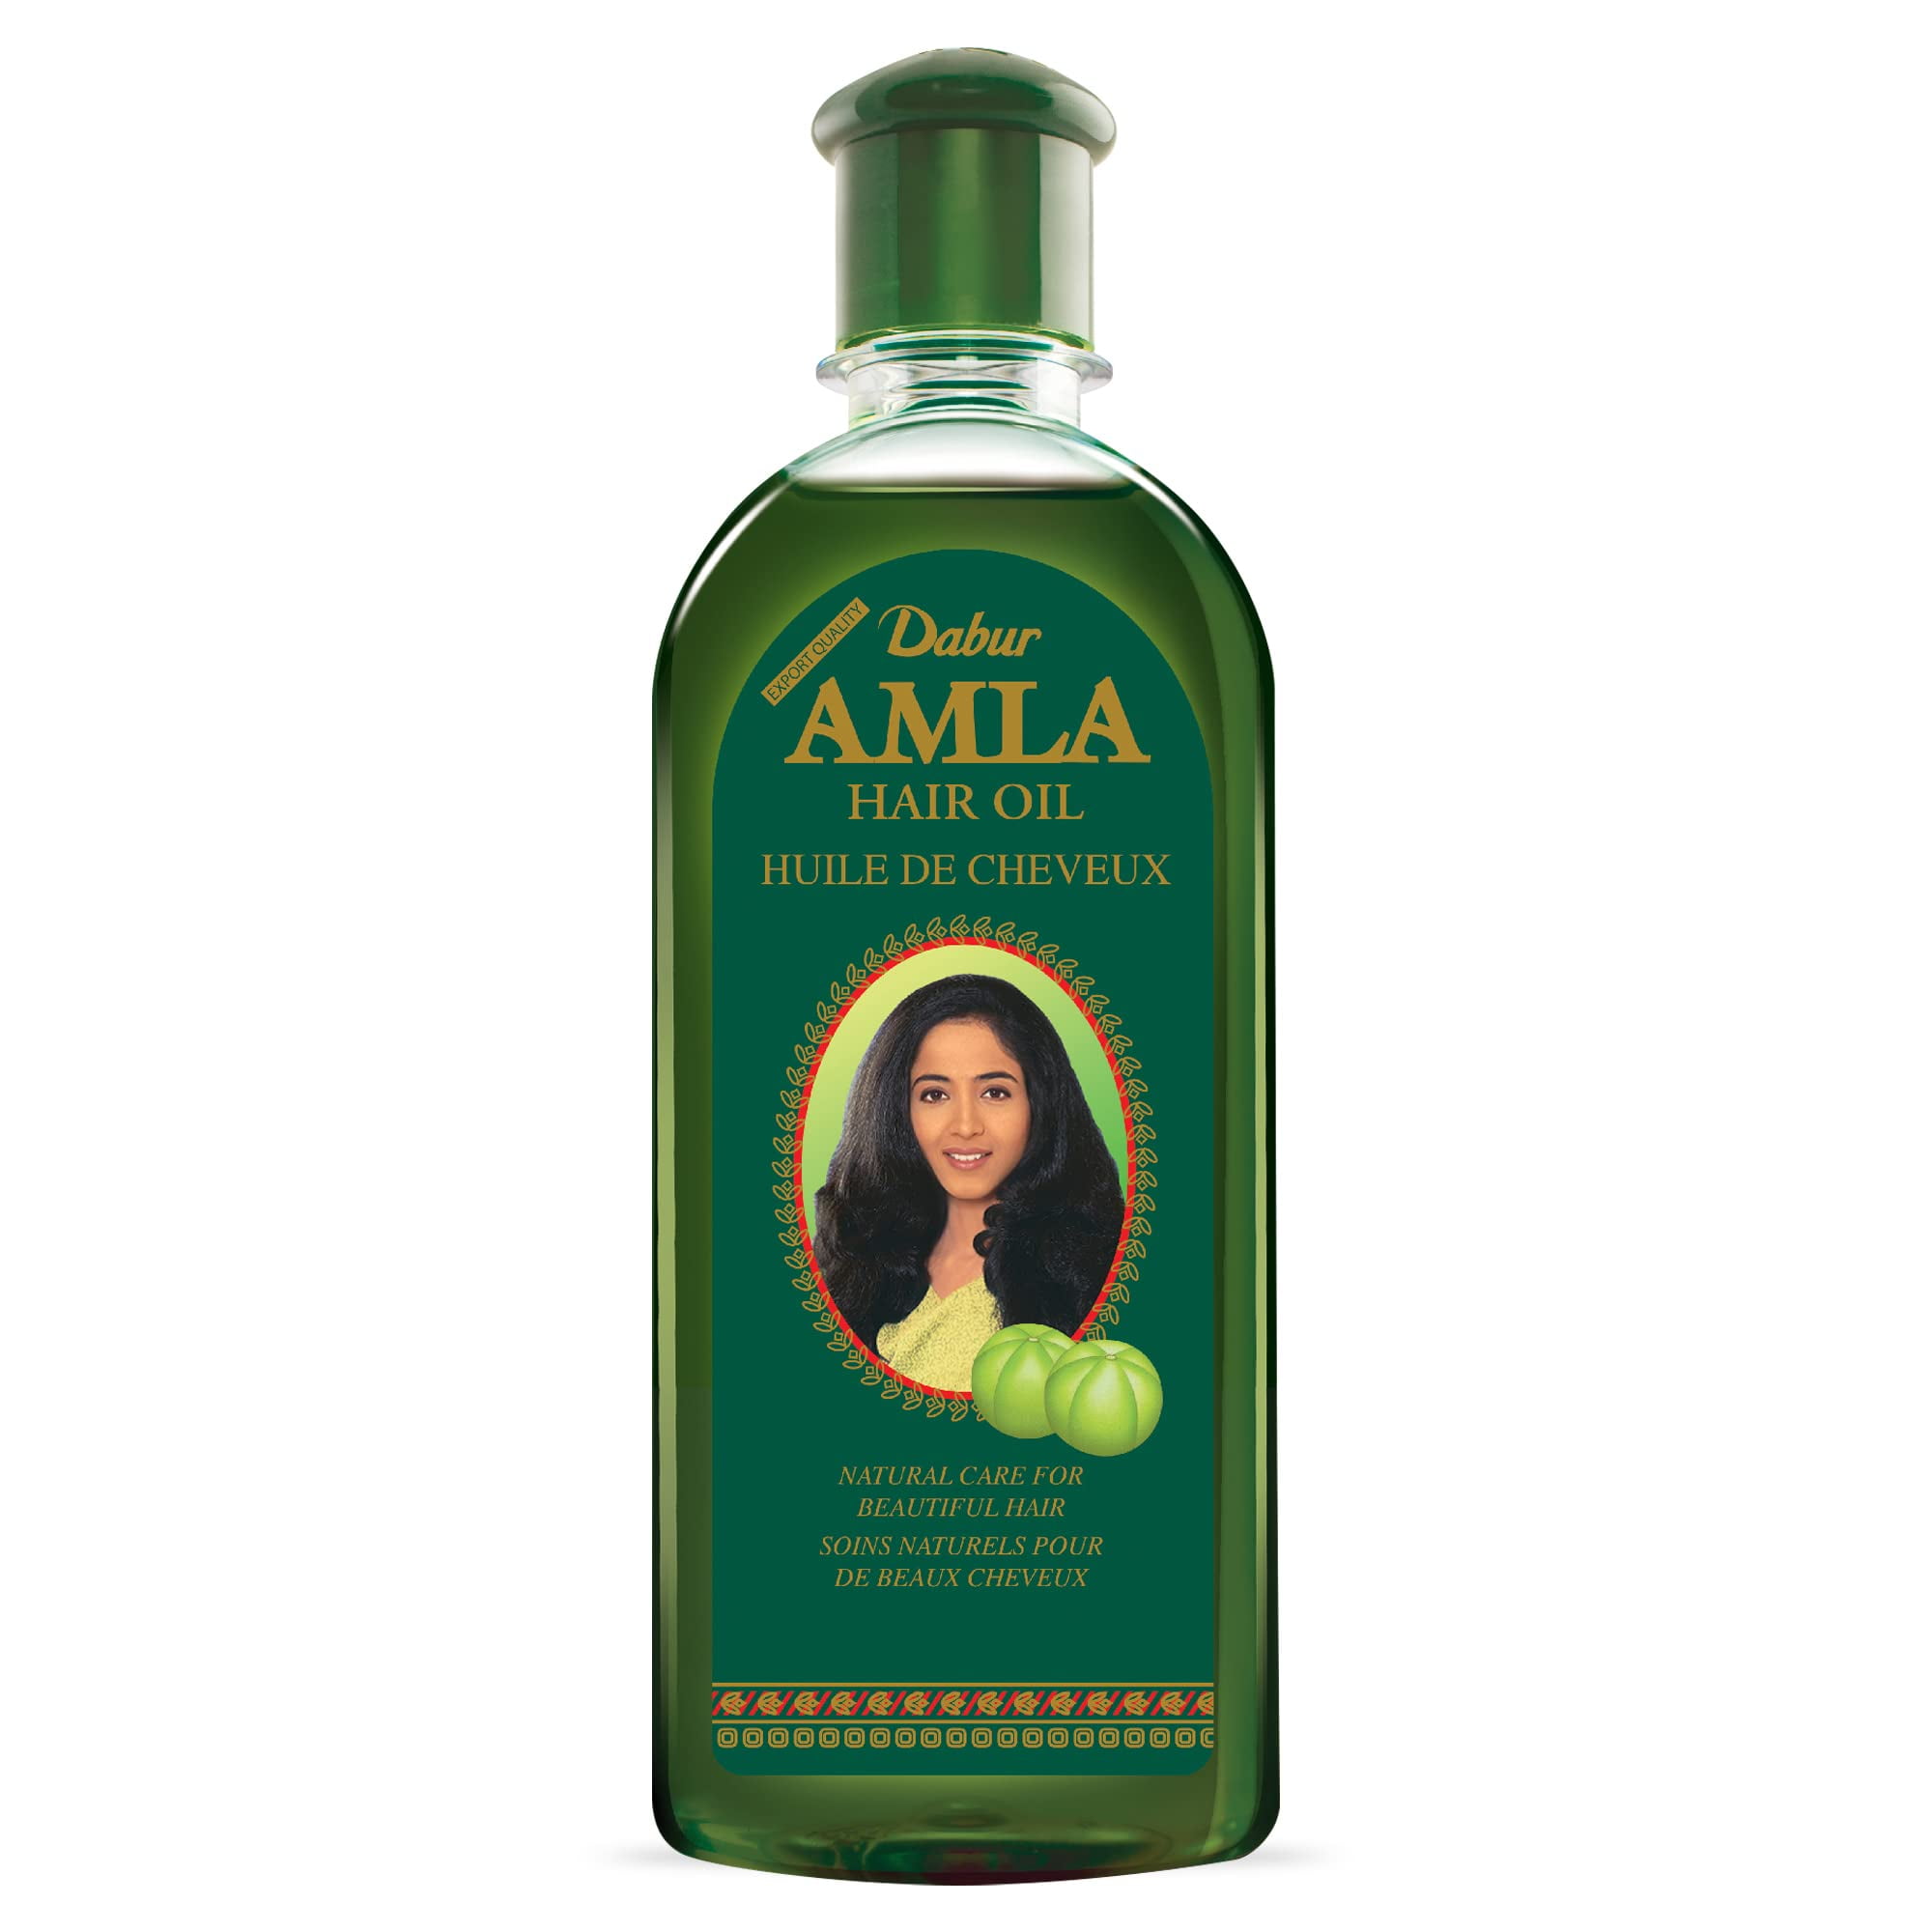 Dabur Amla Hair Oil - INCI Beauty